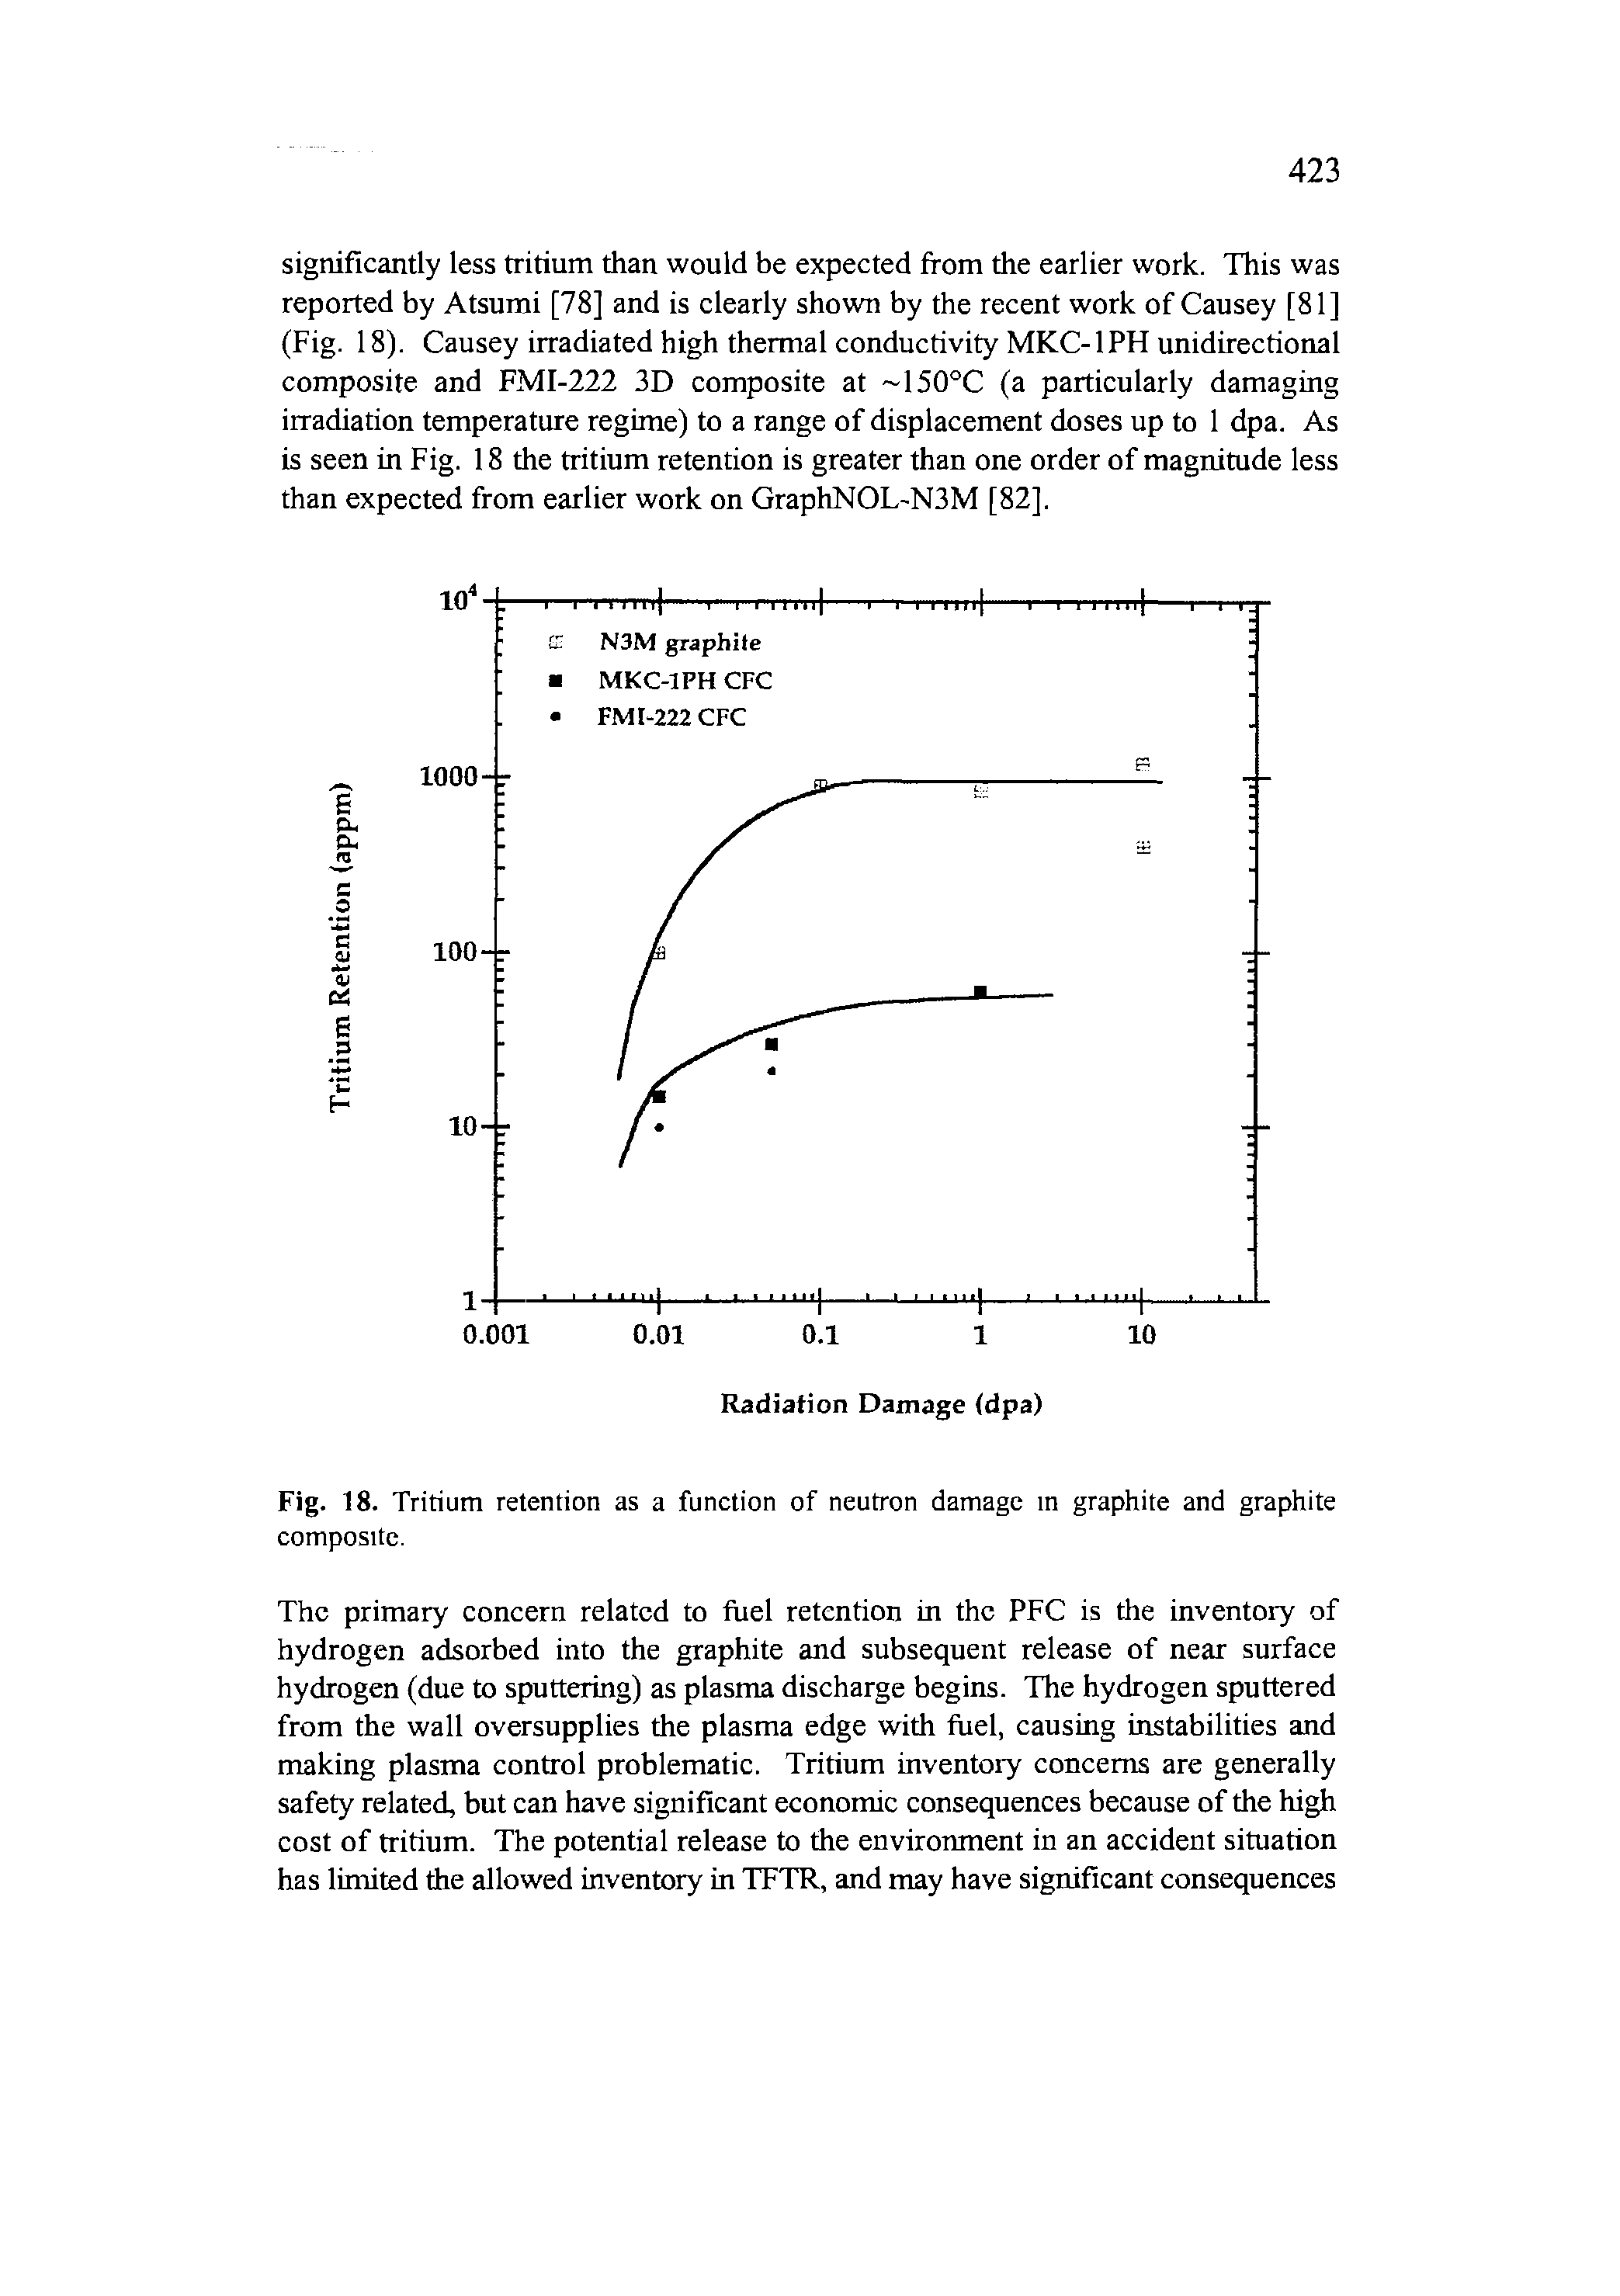 Fig. 18. Tritium retention as a function of neutron damage tn graphite and graphite composite.